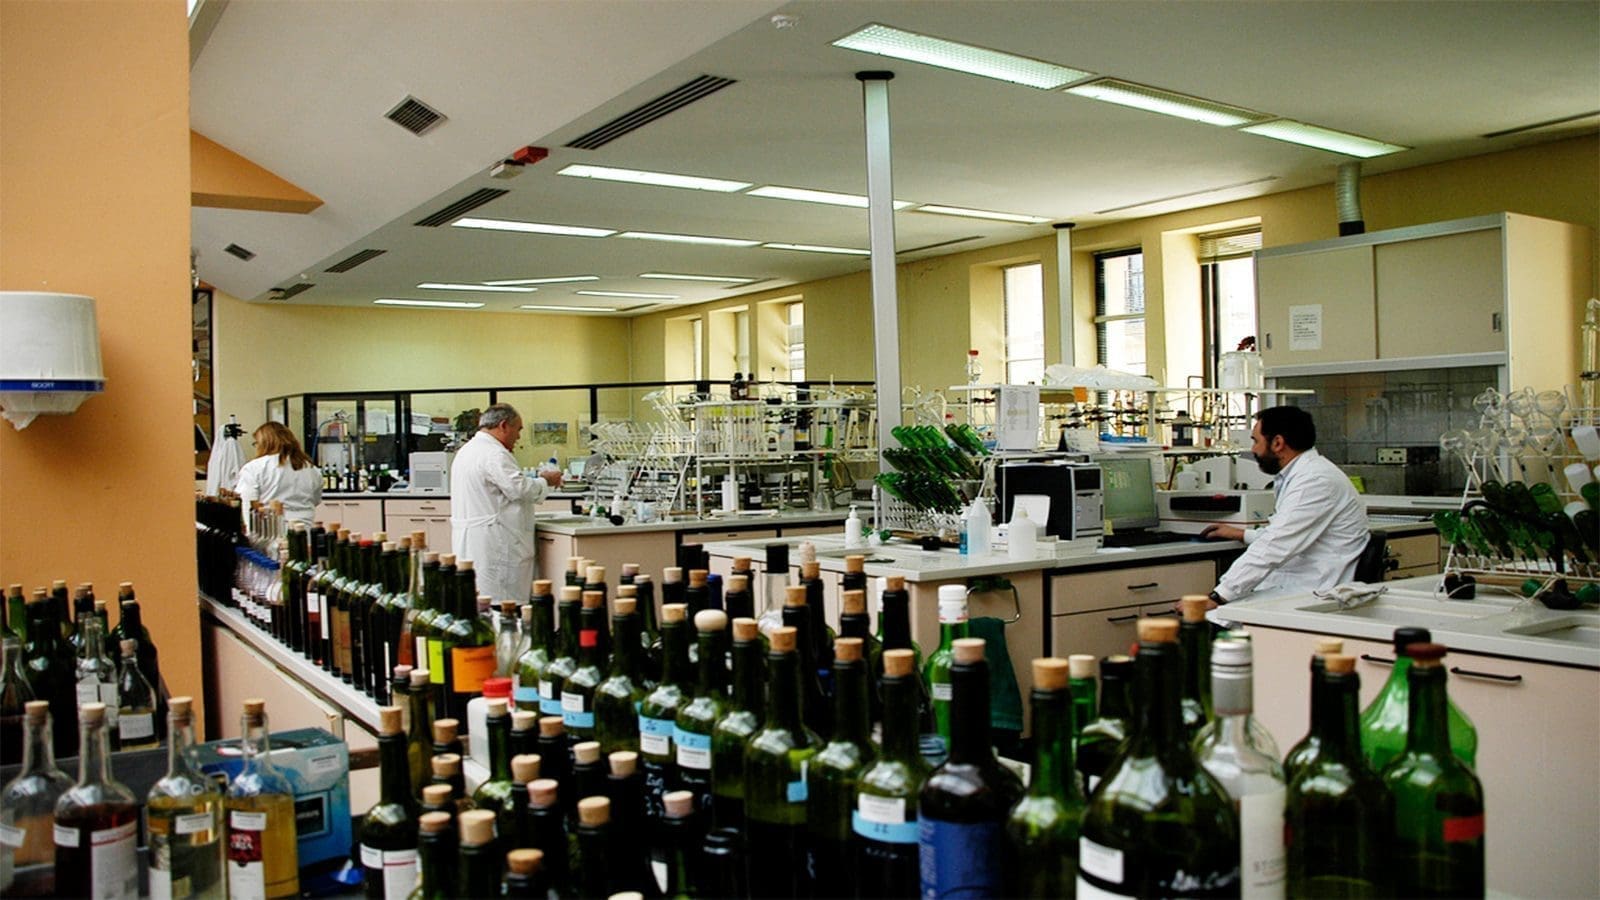 Estación Enológica de Haro launches new wine analysis services to boost wine authenticity